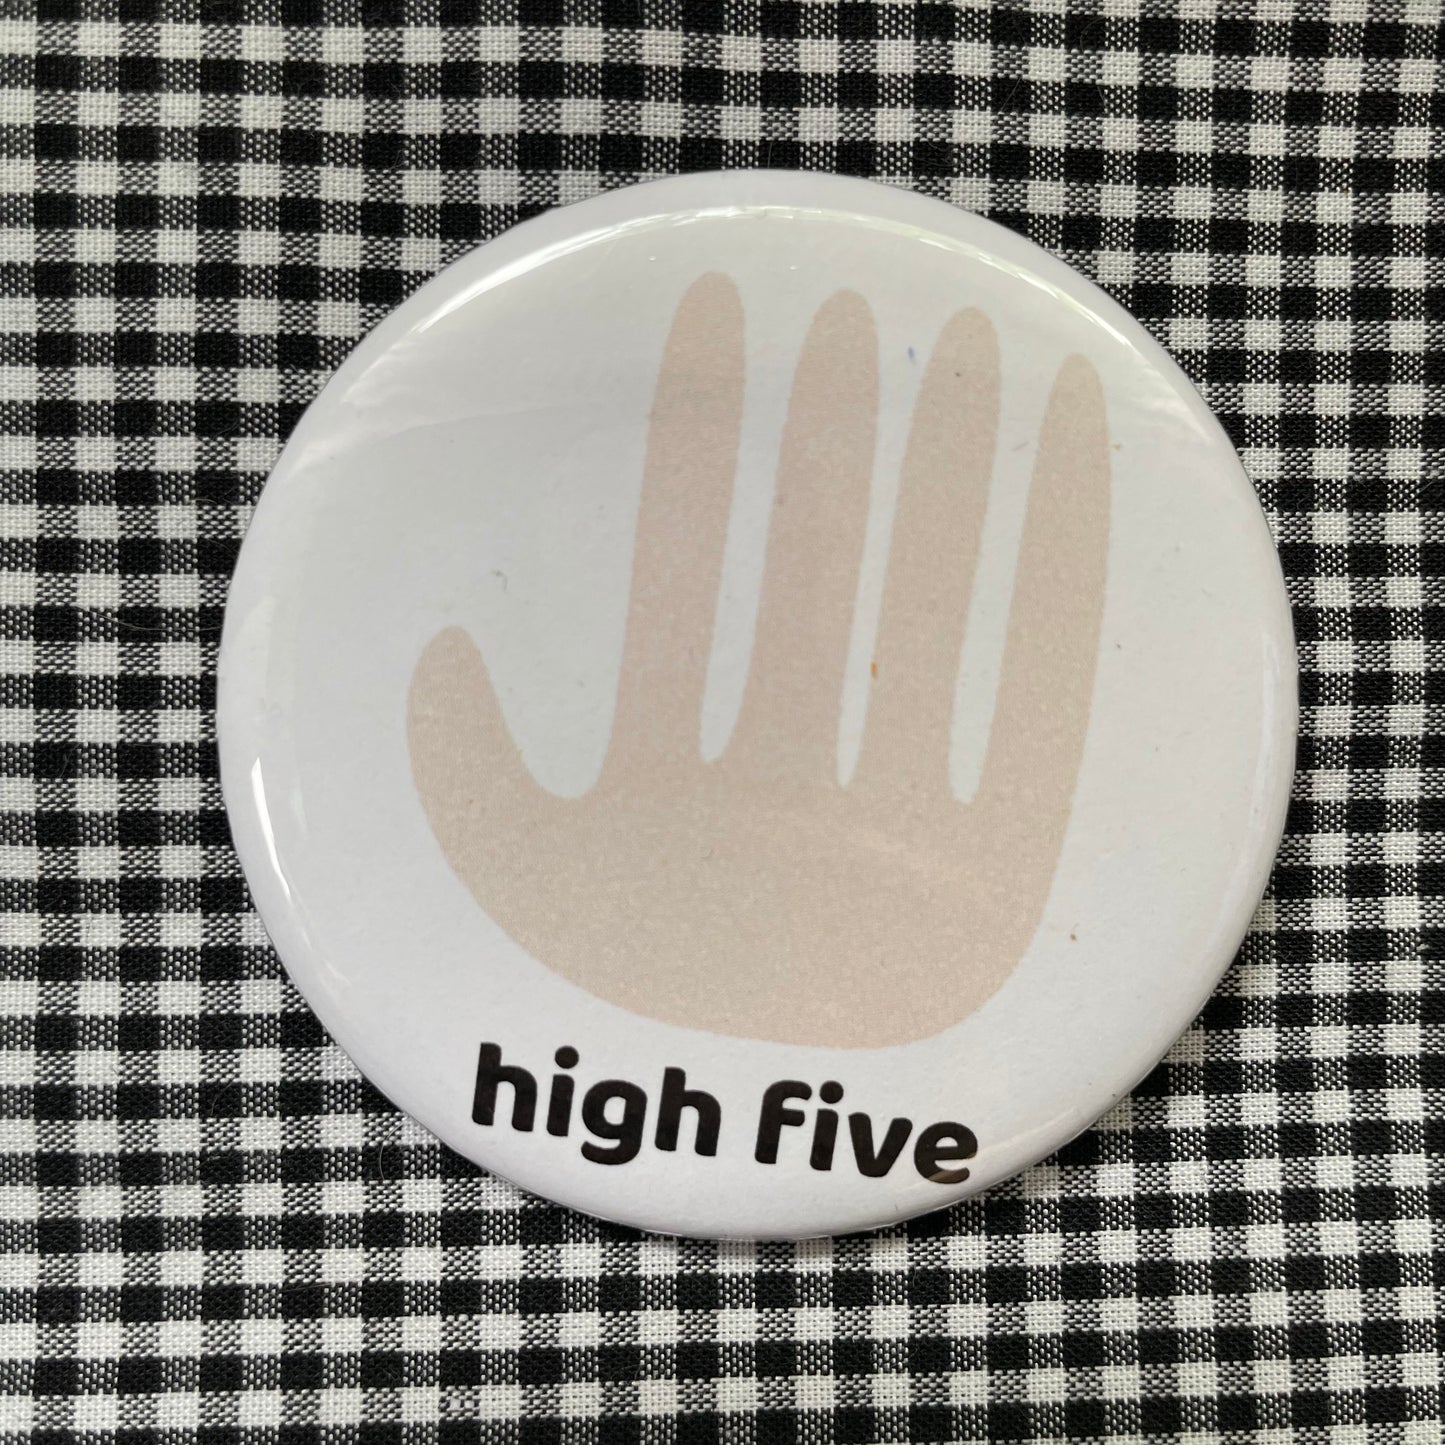 HIGH FIVE PIN / MAGNET / MIRROR  2.25”